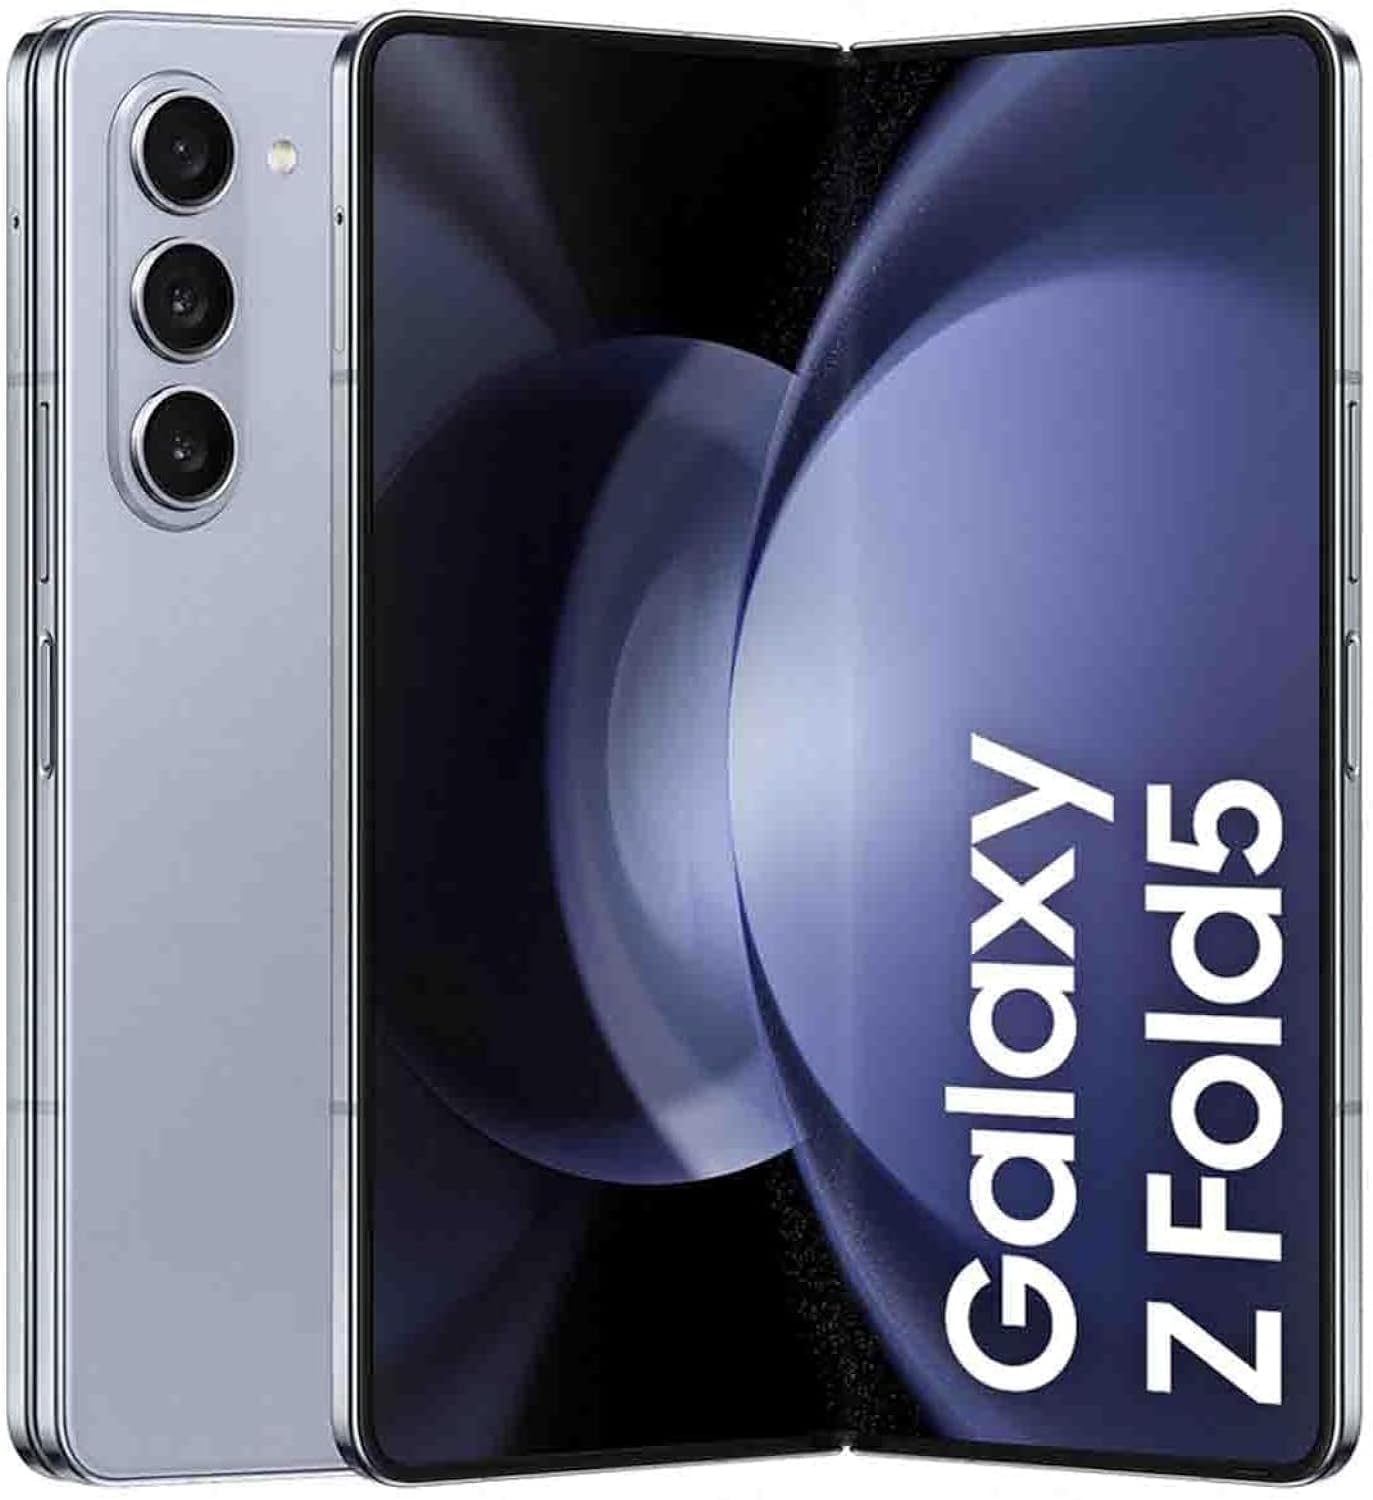 SAMSUNG Galaxy Z Fold 5 F9460 Foldable Design, 5G Physical Dual Sim 512GB 12GB RAM Factory Unlocked Global Smartphone Mobile Cell - ICY Blue